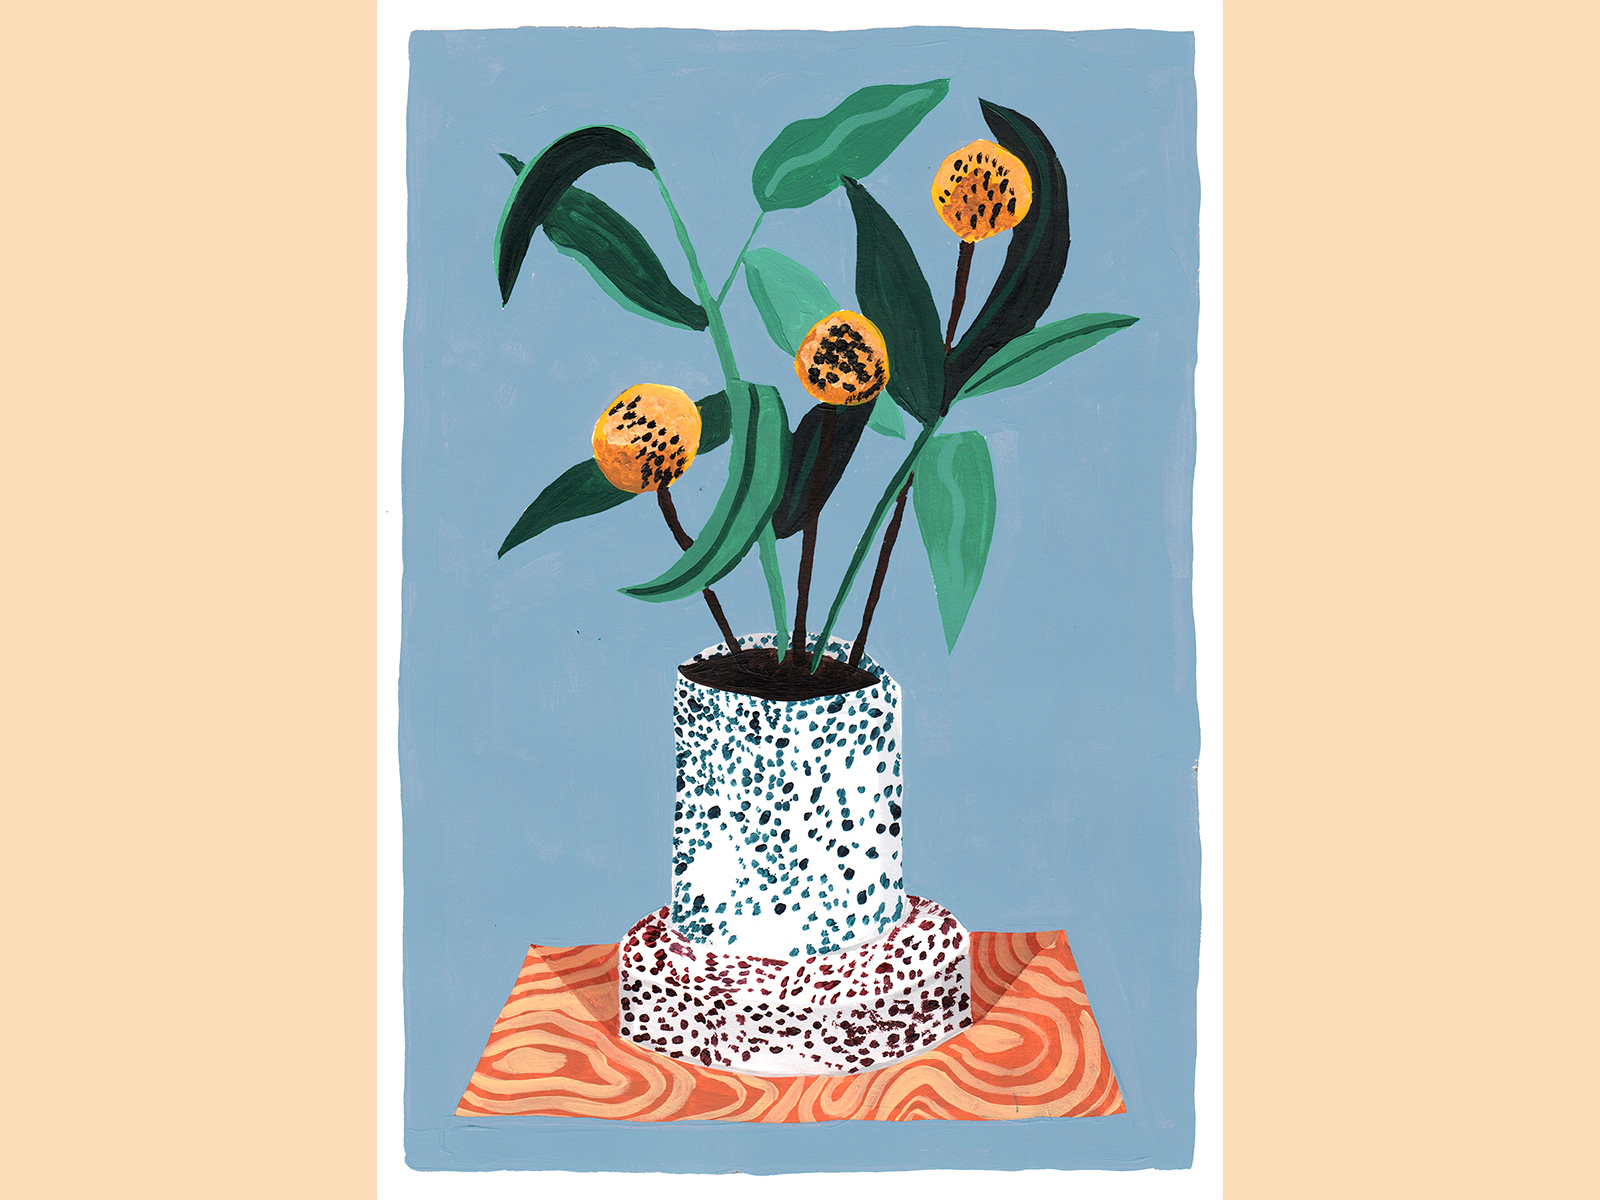 Vase no. 4 by Anne van den Boogaard on Dribbble